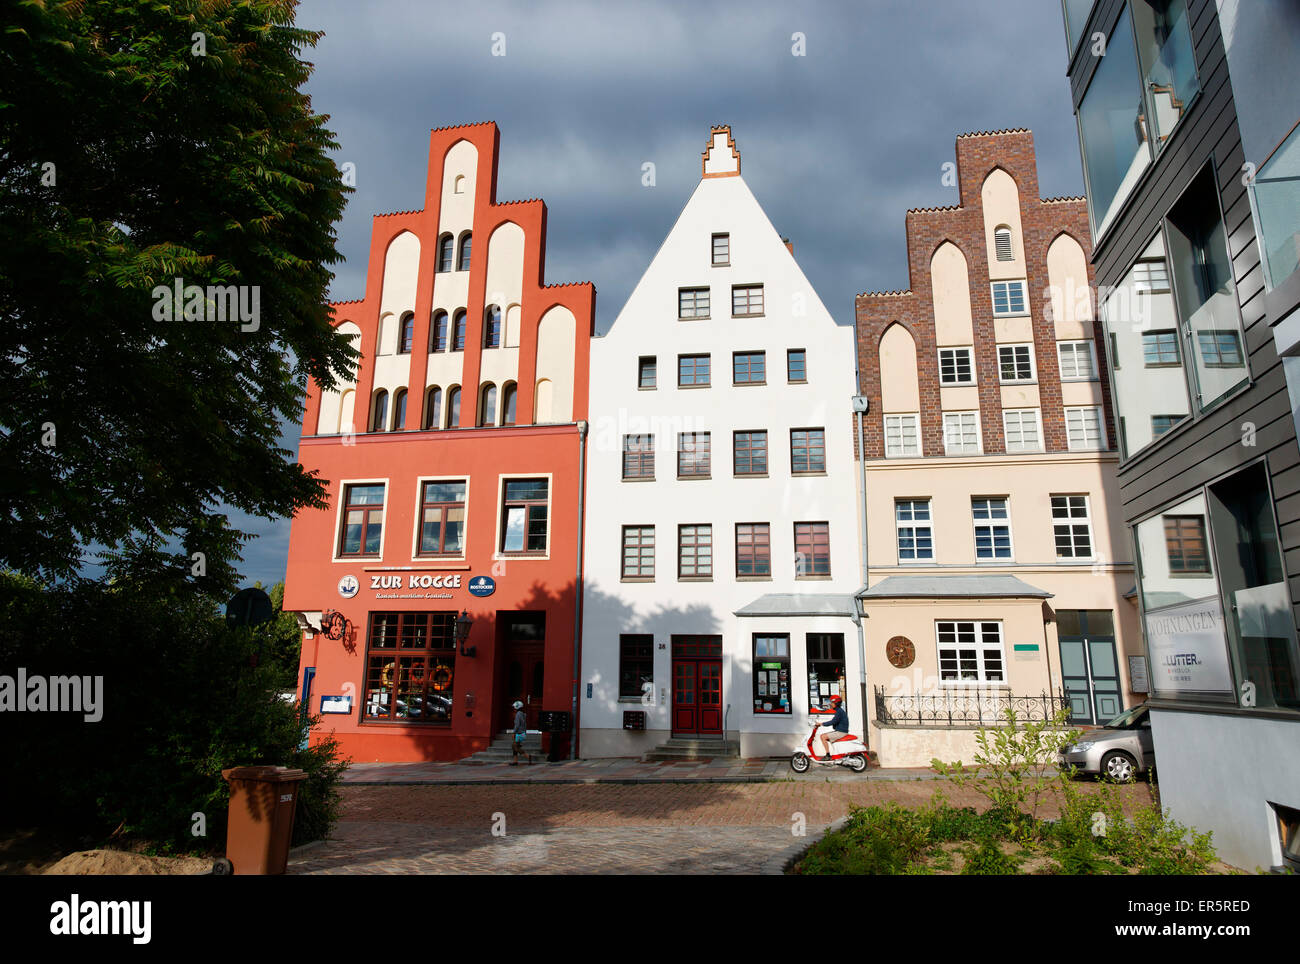 Lagerstrasse, Hanseatic City of Rostock, Mecklenburg-Western Pomerania, Germany Stock Photo